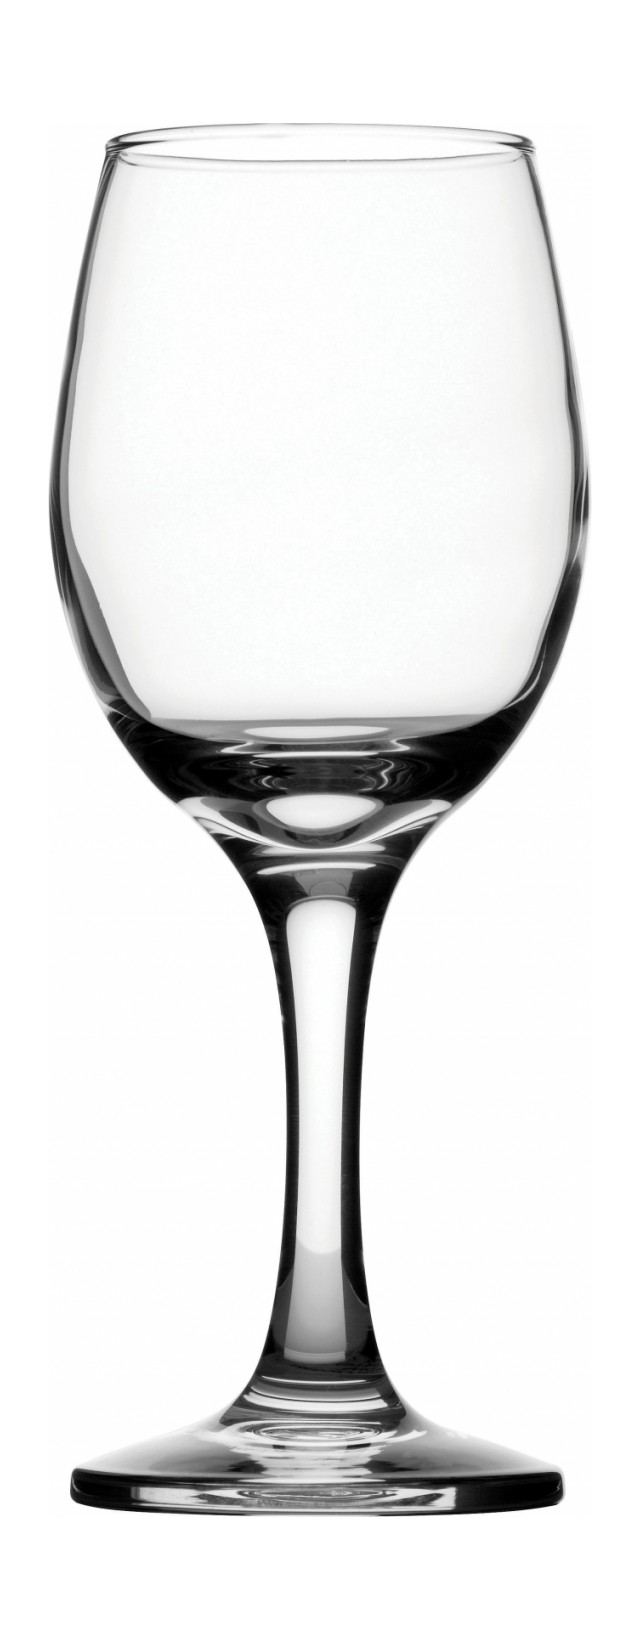 clip art empty wine glass - photo #37